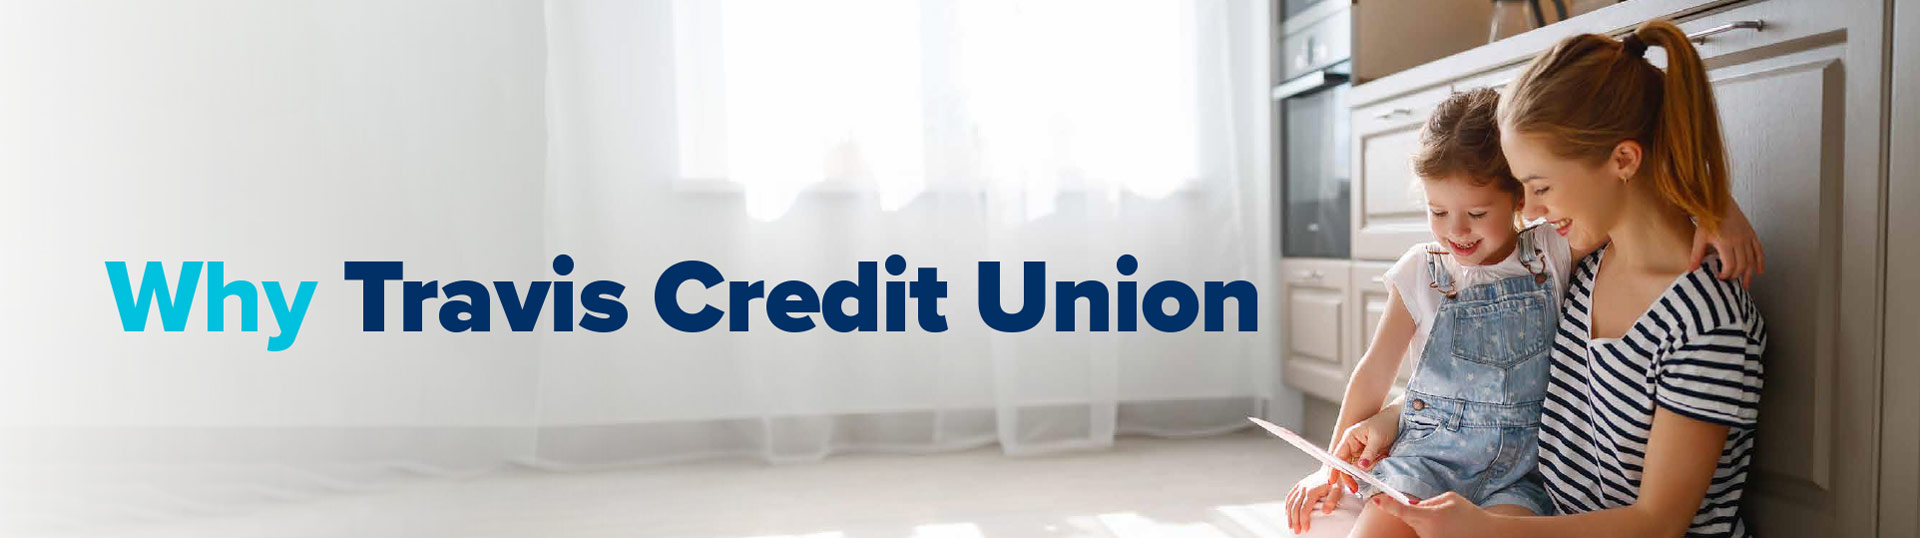 Why Travis Credit Union